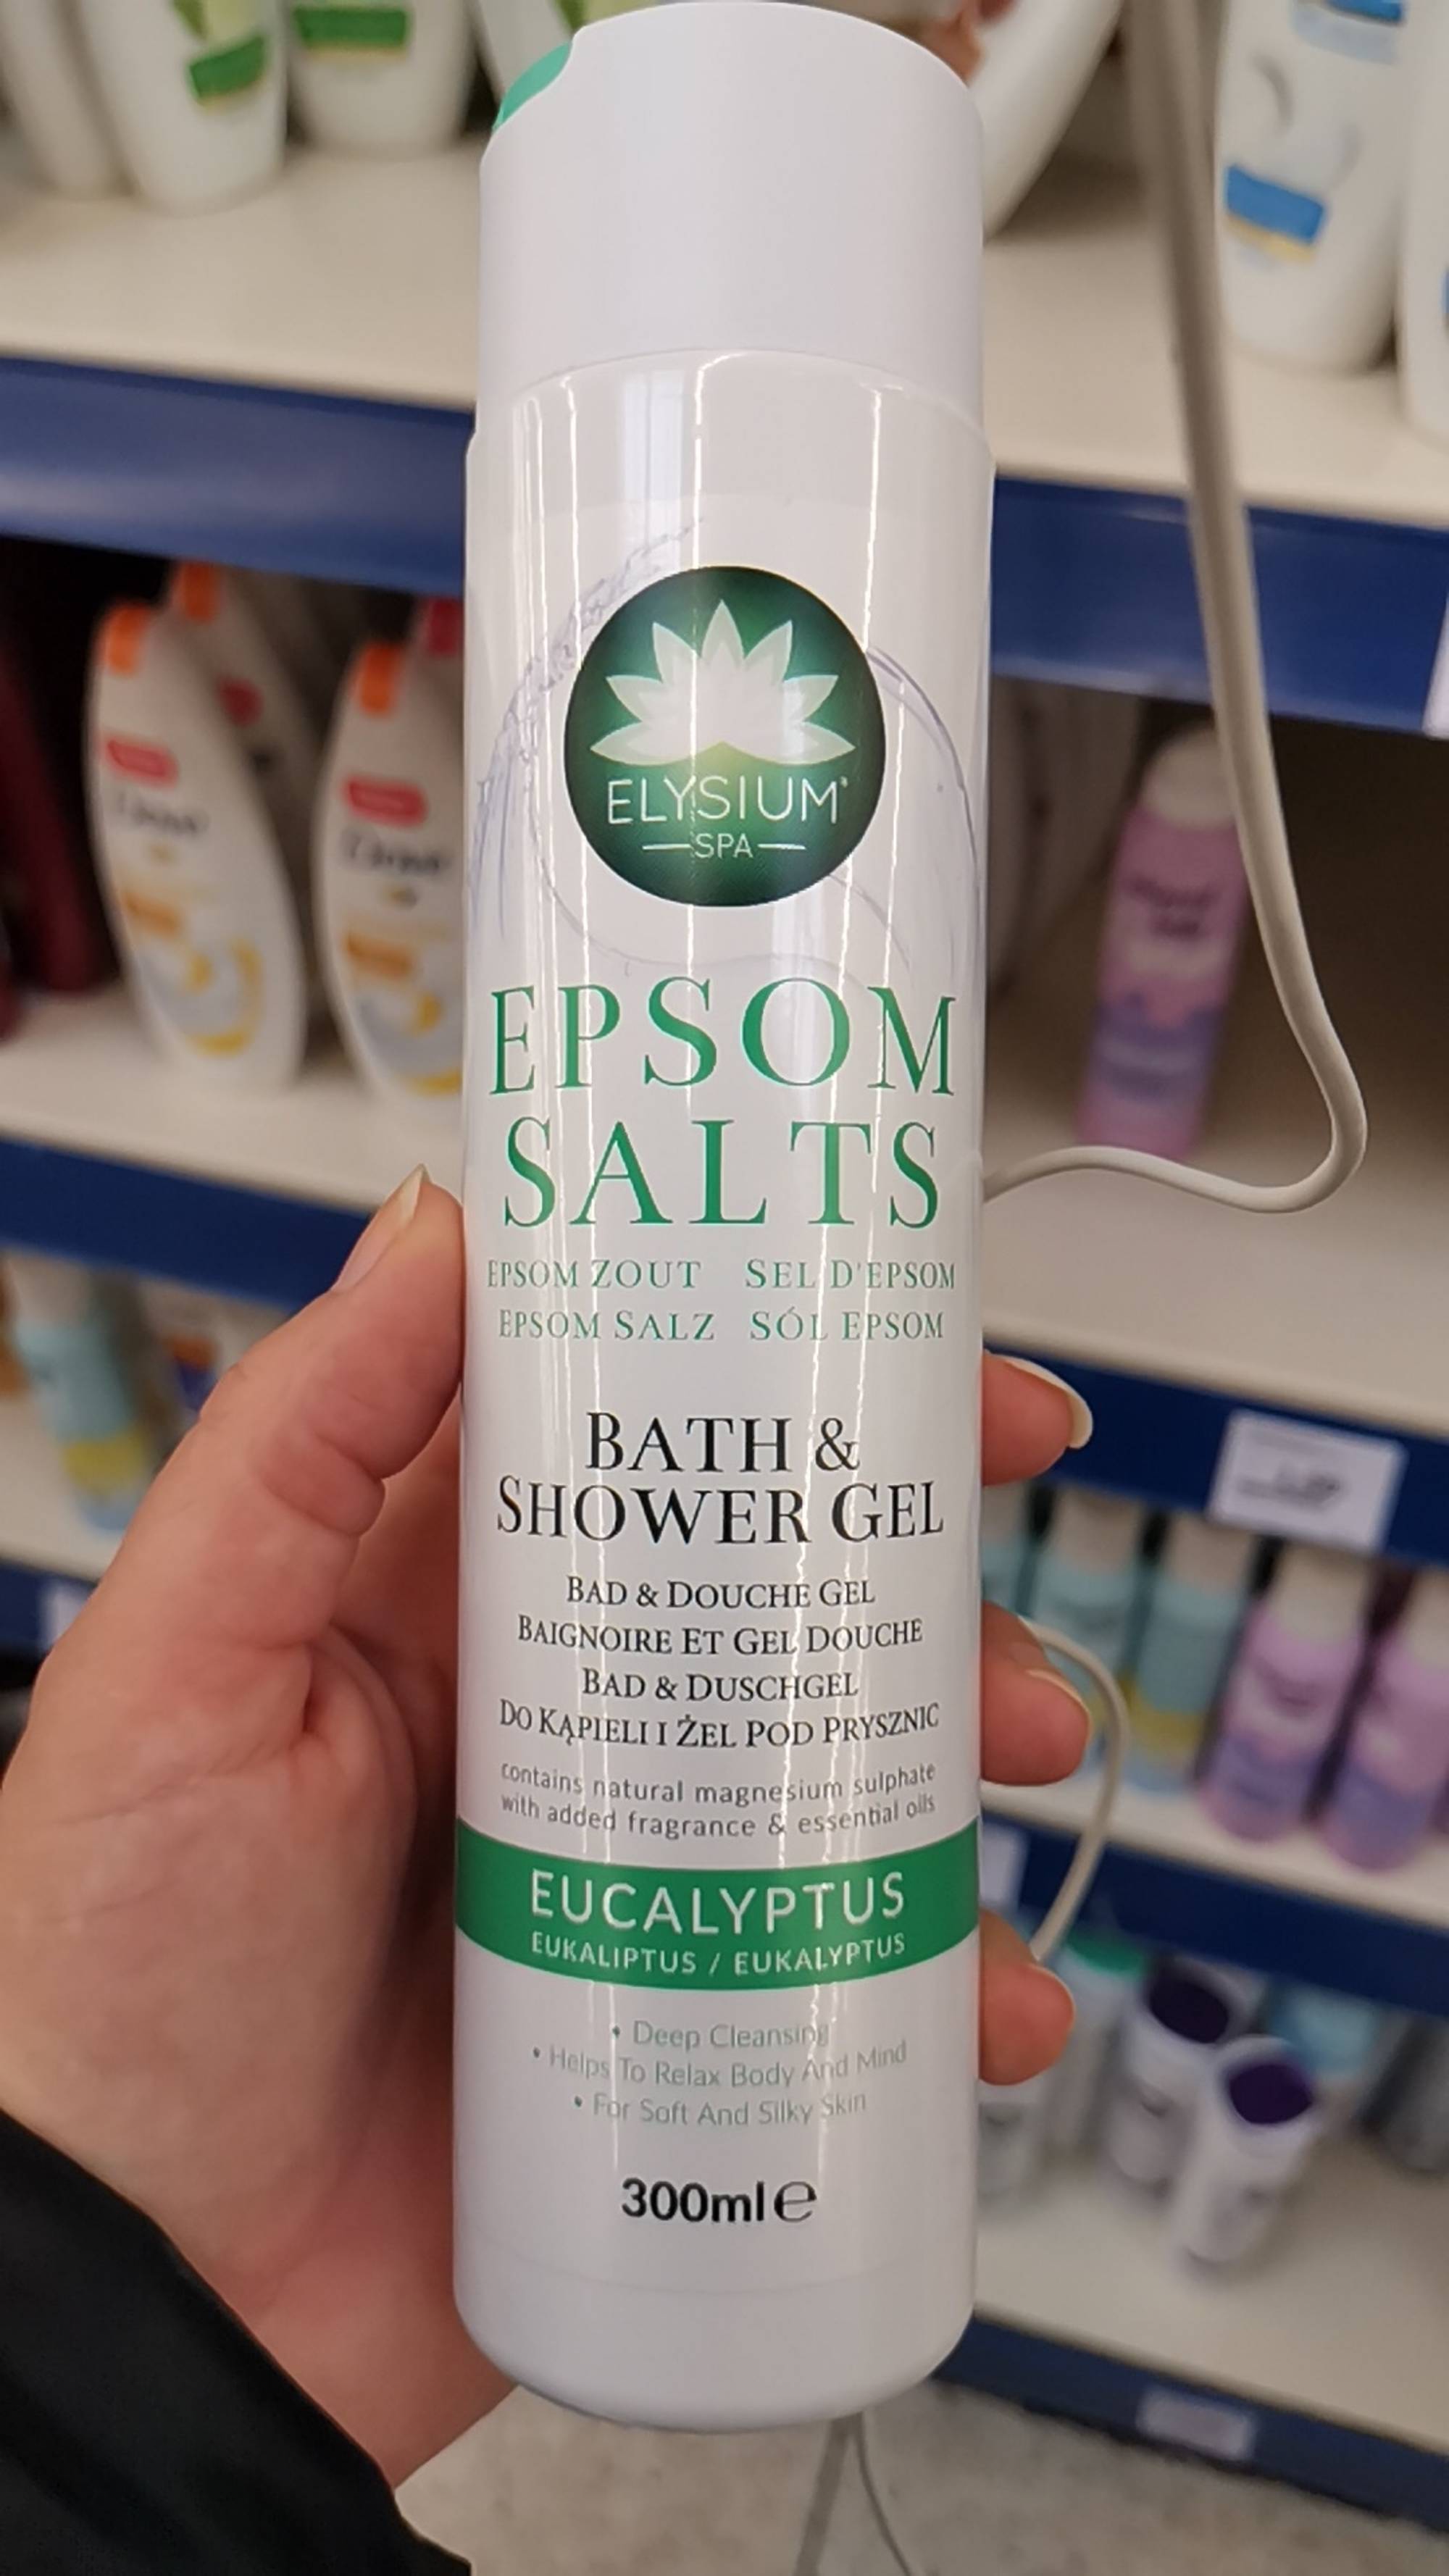 ELYSIUM SPA - Epsom salts - Bath & shower gel eucalyptus